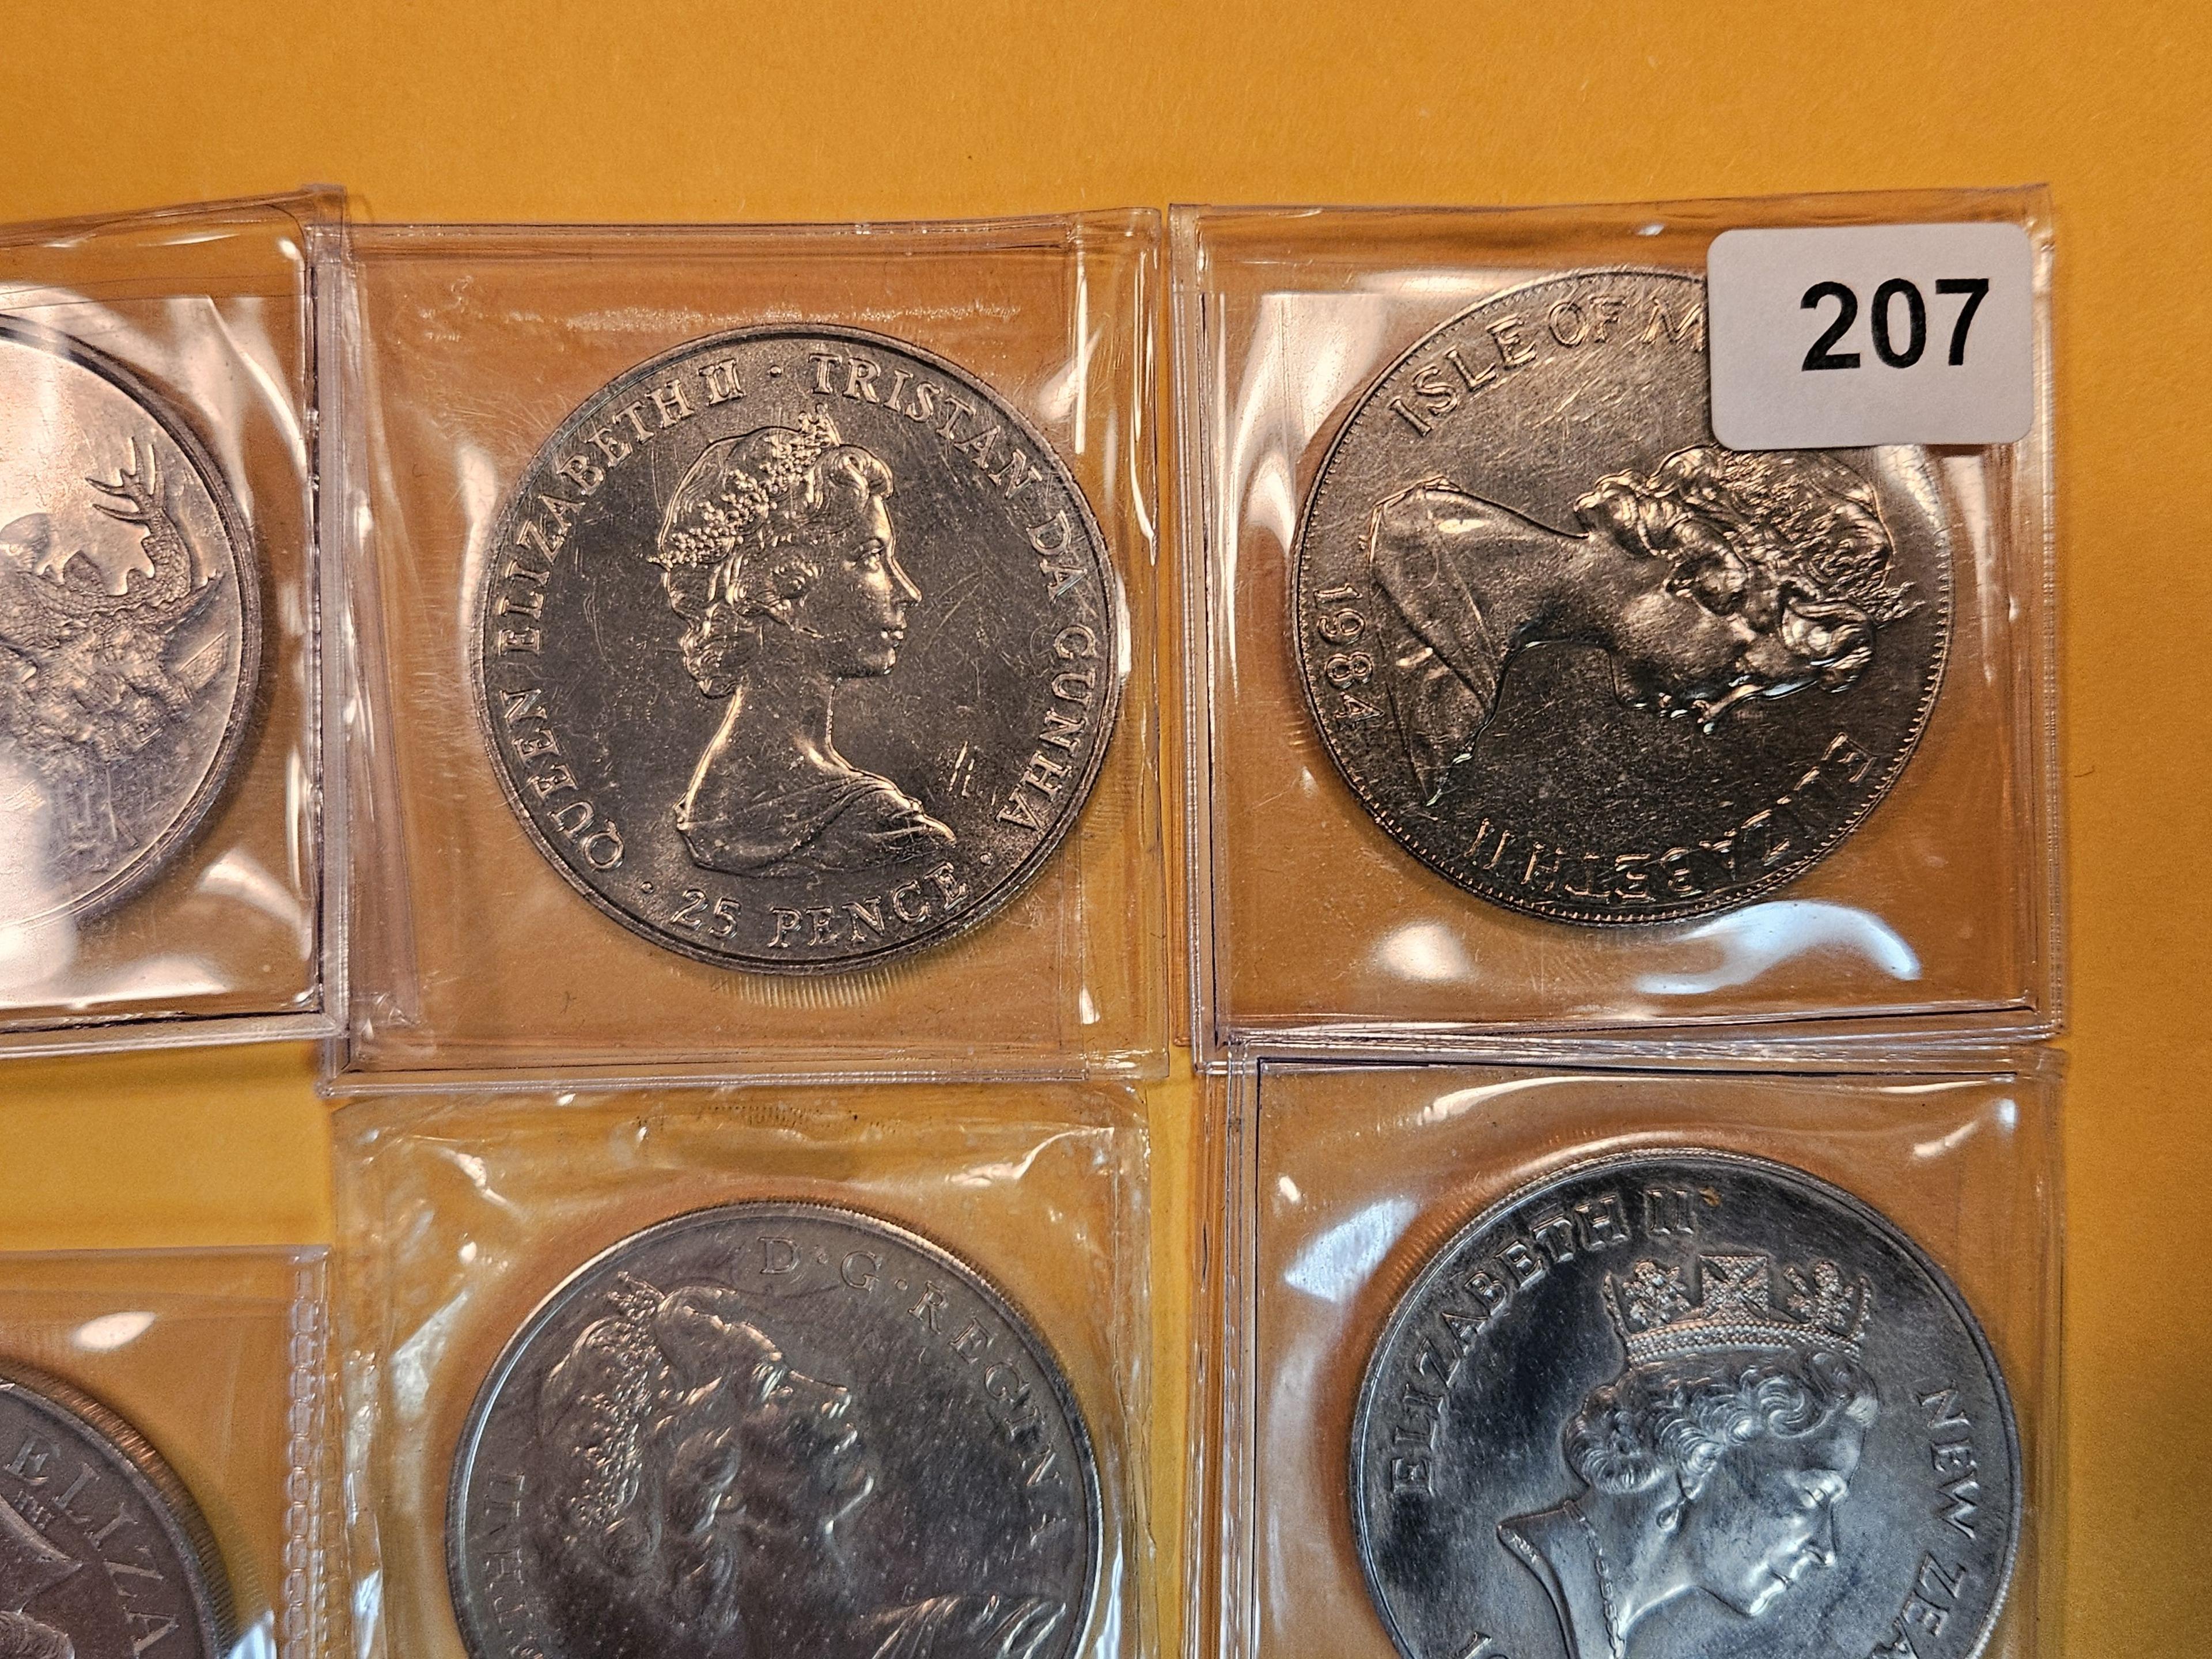 Ten Crown-Sized coins